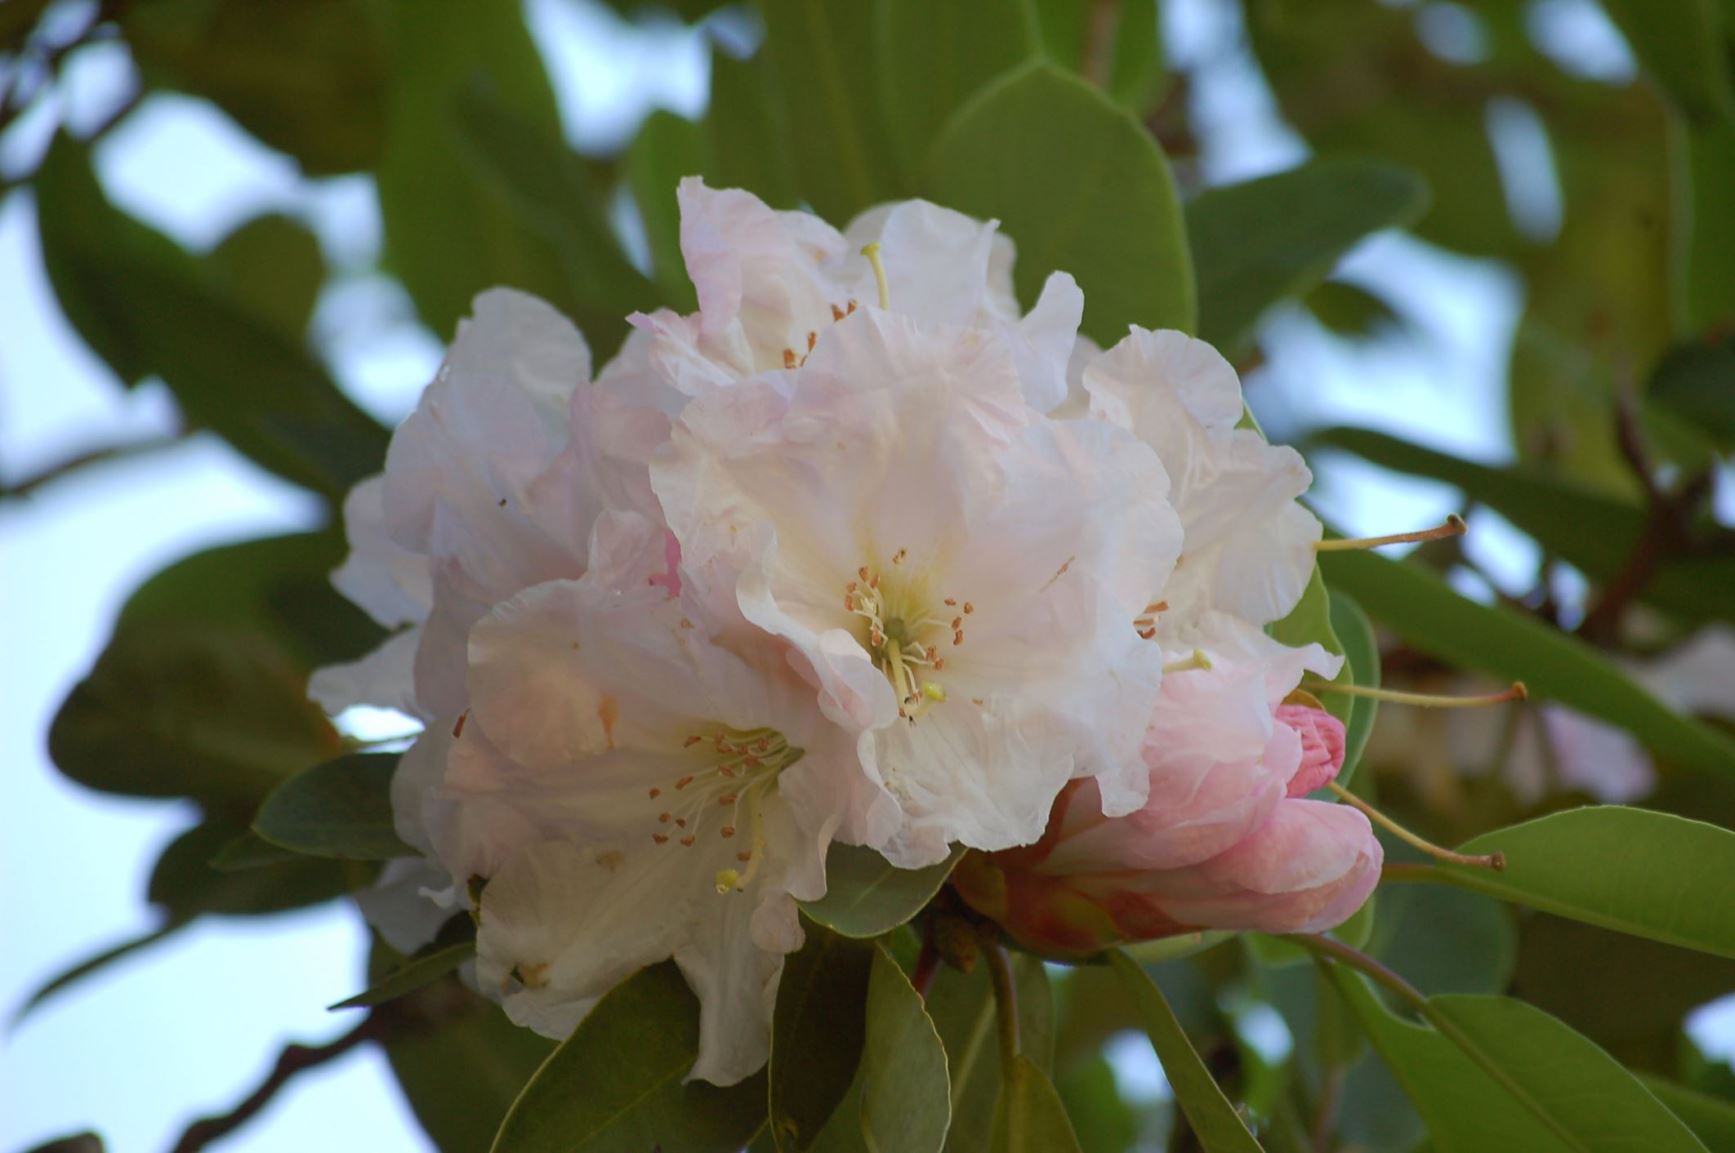 Rhododendron serotinum